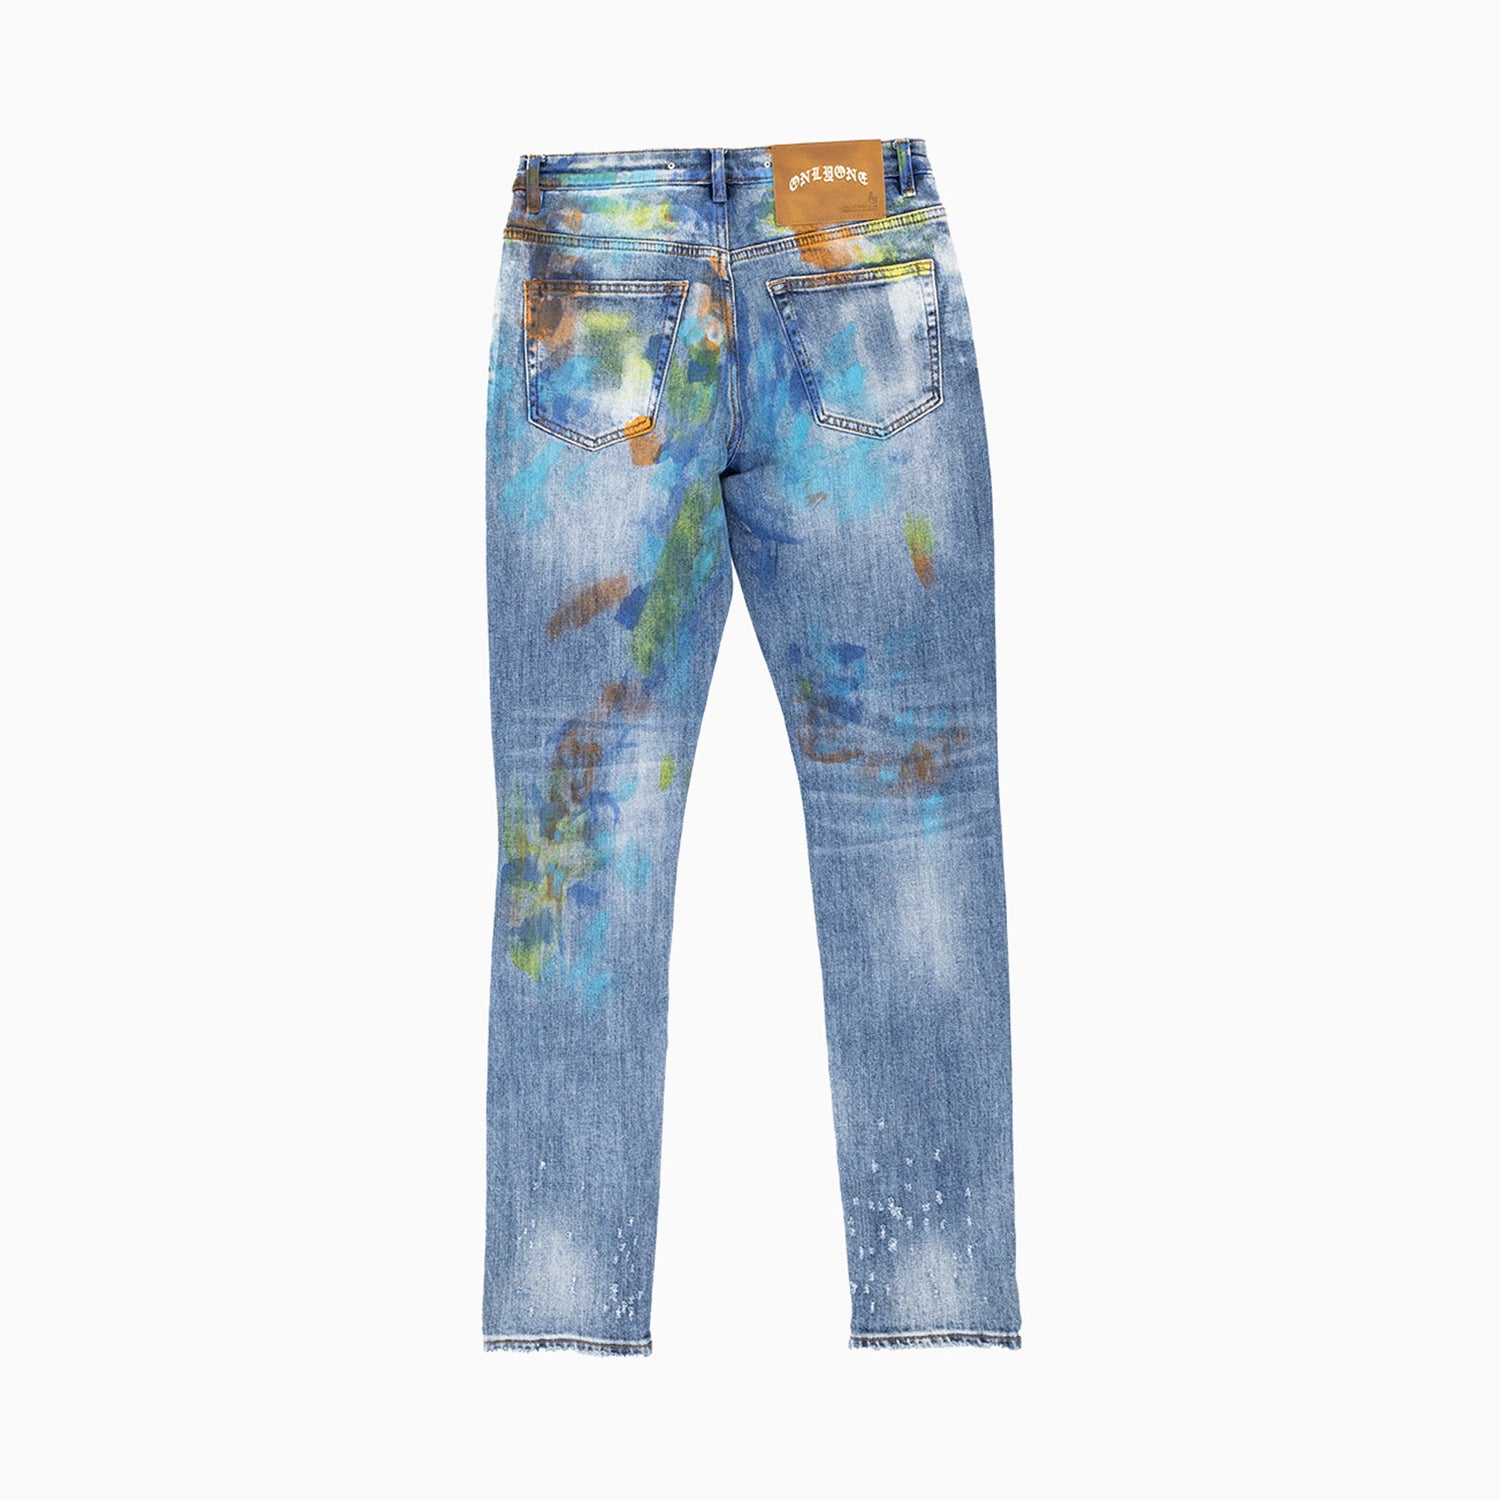 only-one-mens-long-island-zip-flair-splatter-jeans-denim-pant-onojn03-003